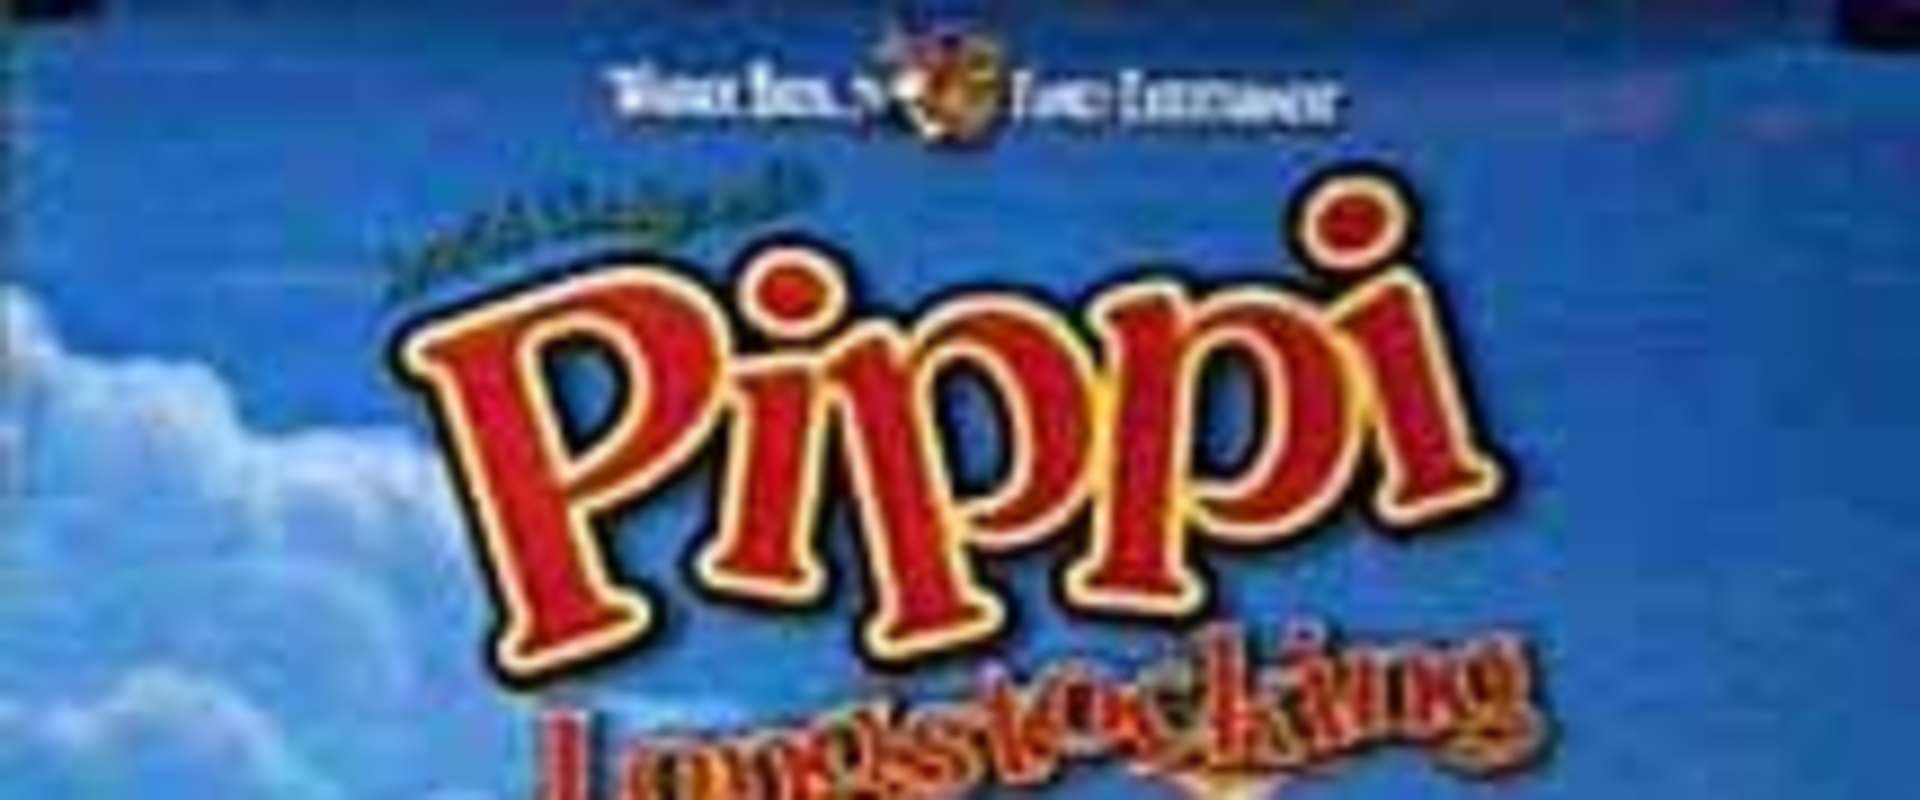 Pippi Longstocking background 2